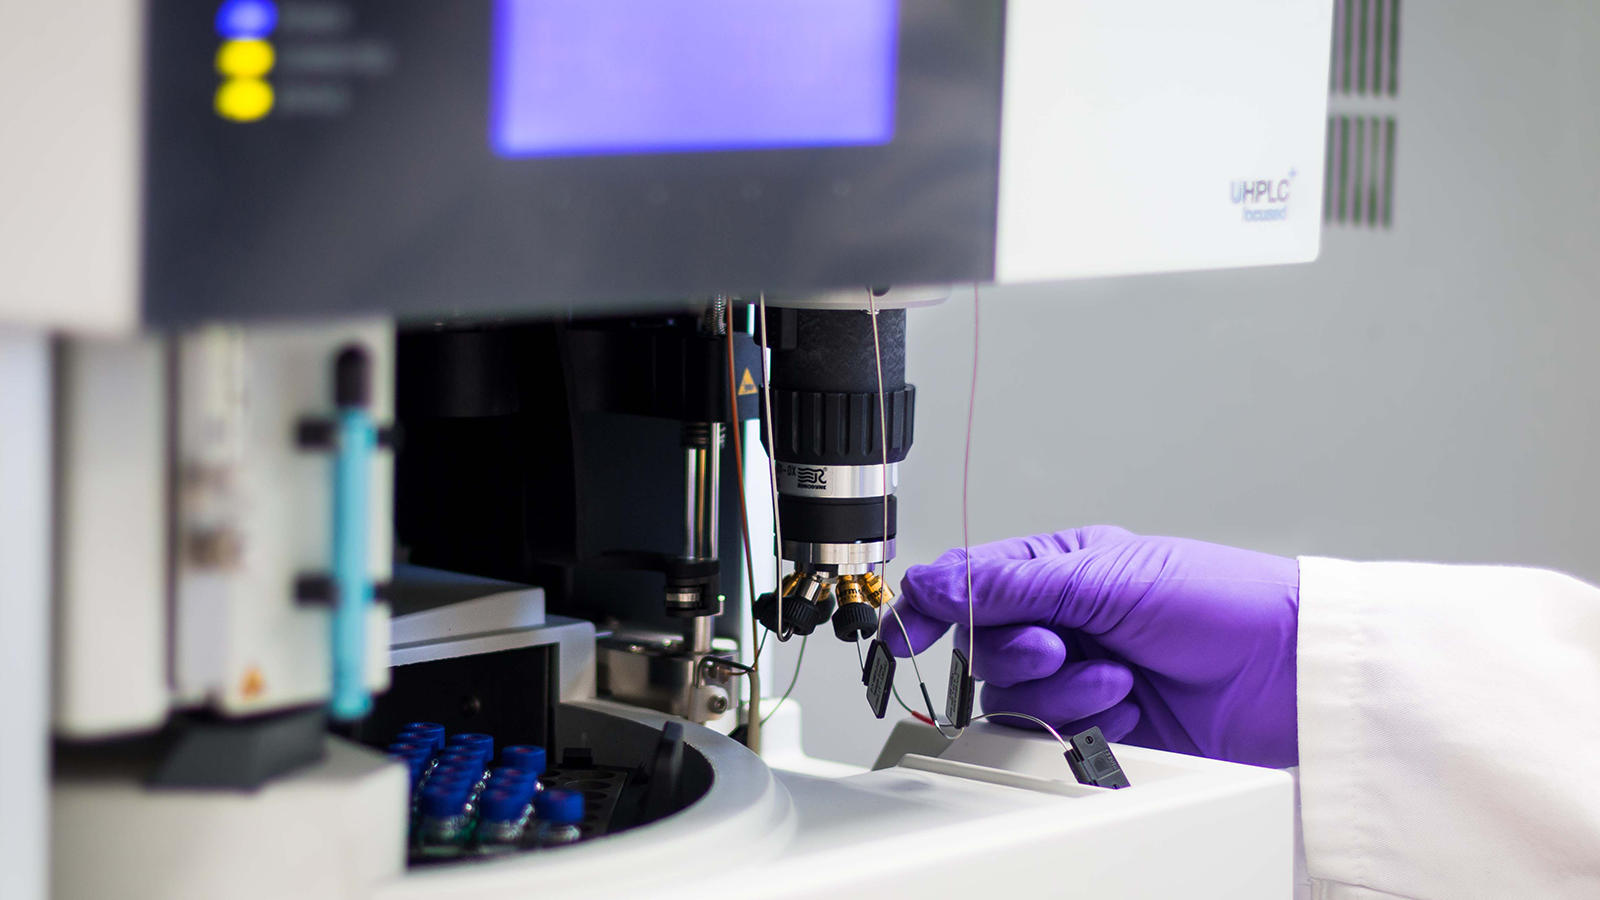 A scientist wearing purple gloves using a mass spectrometer